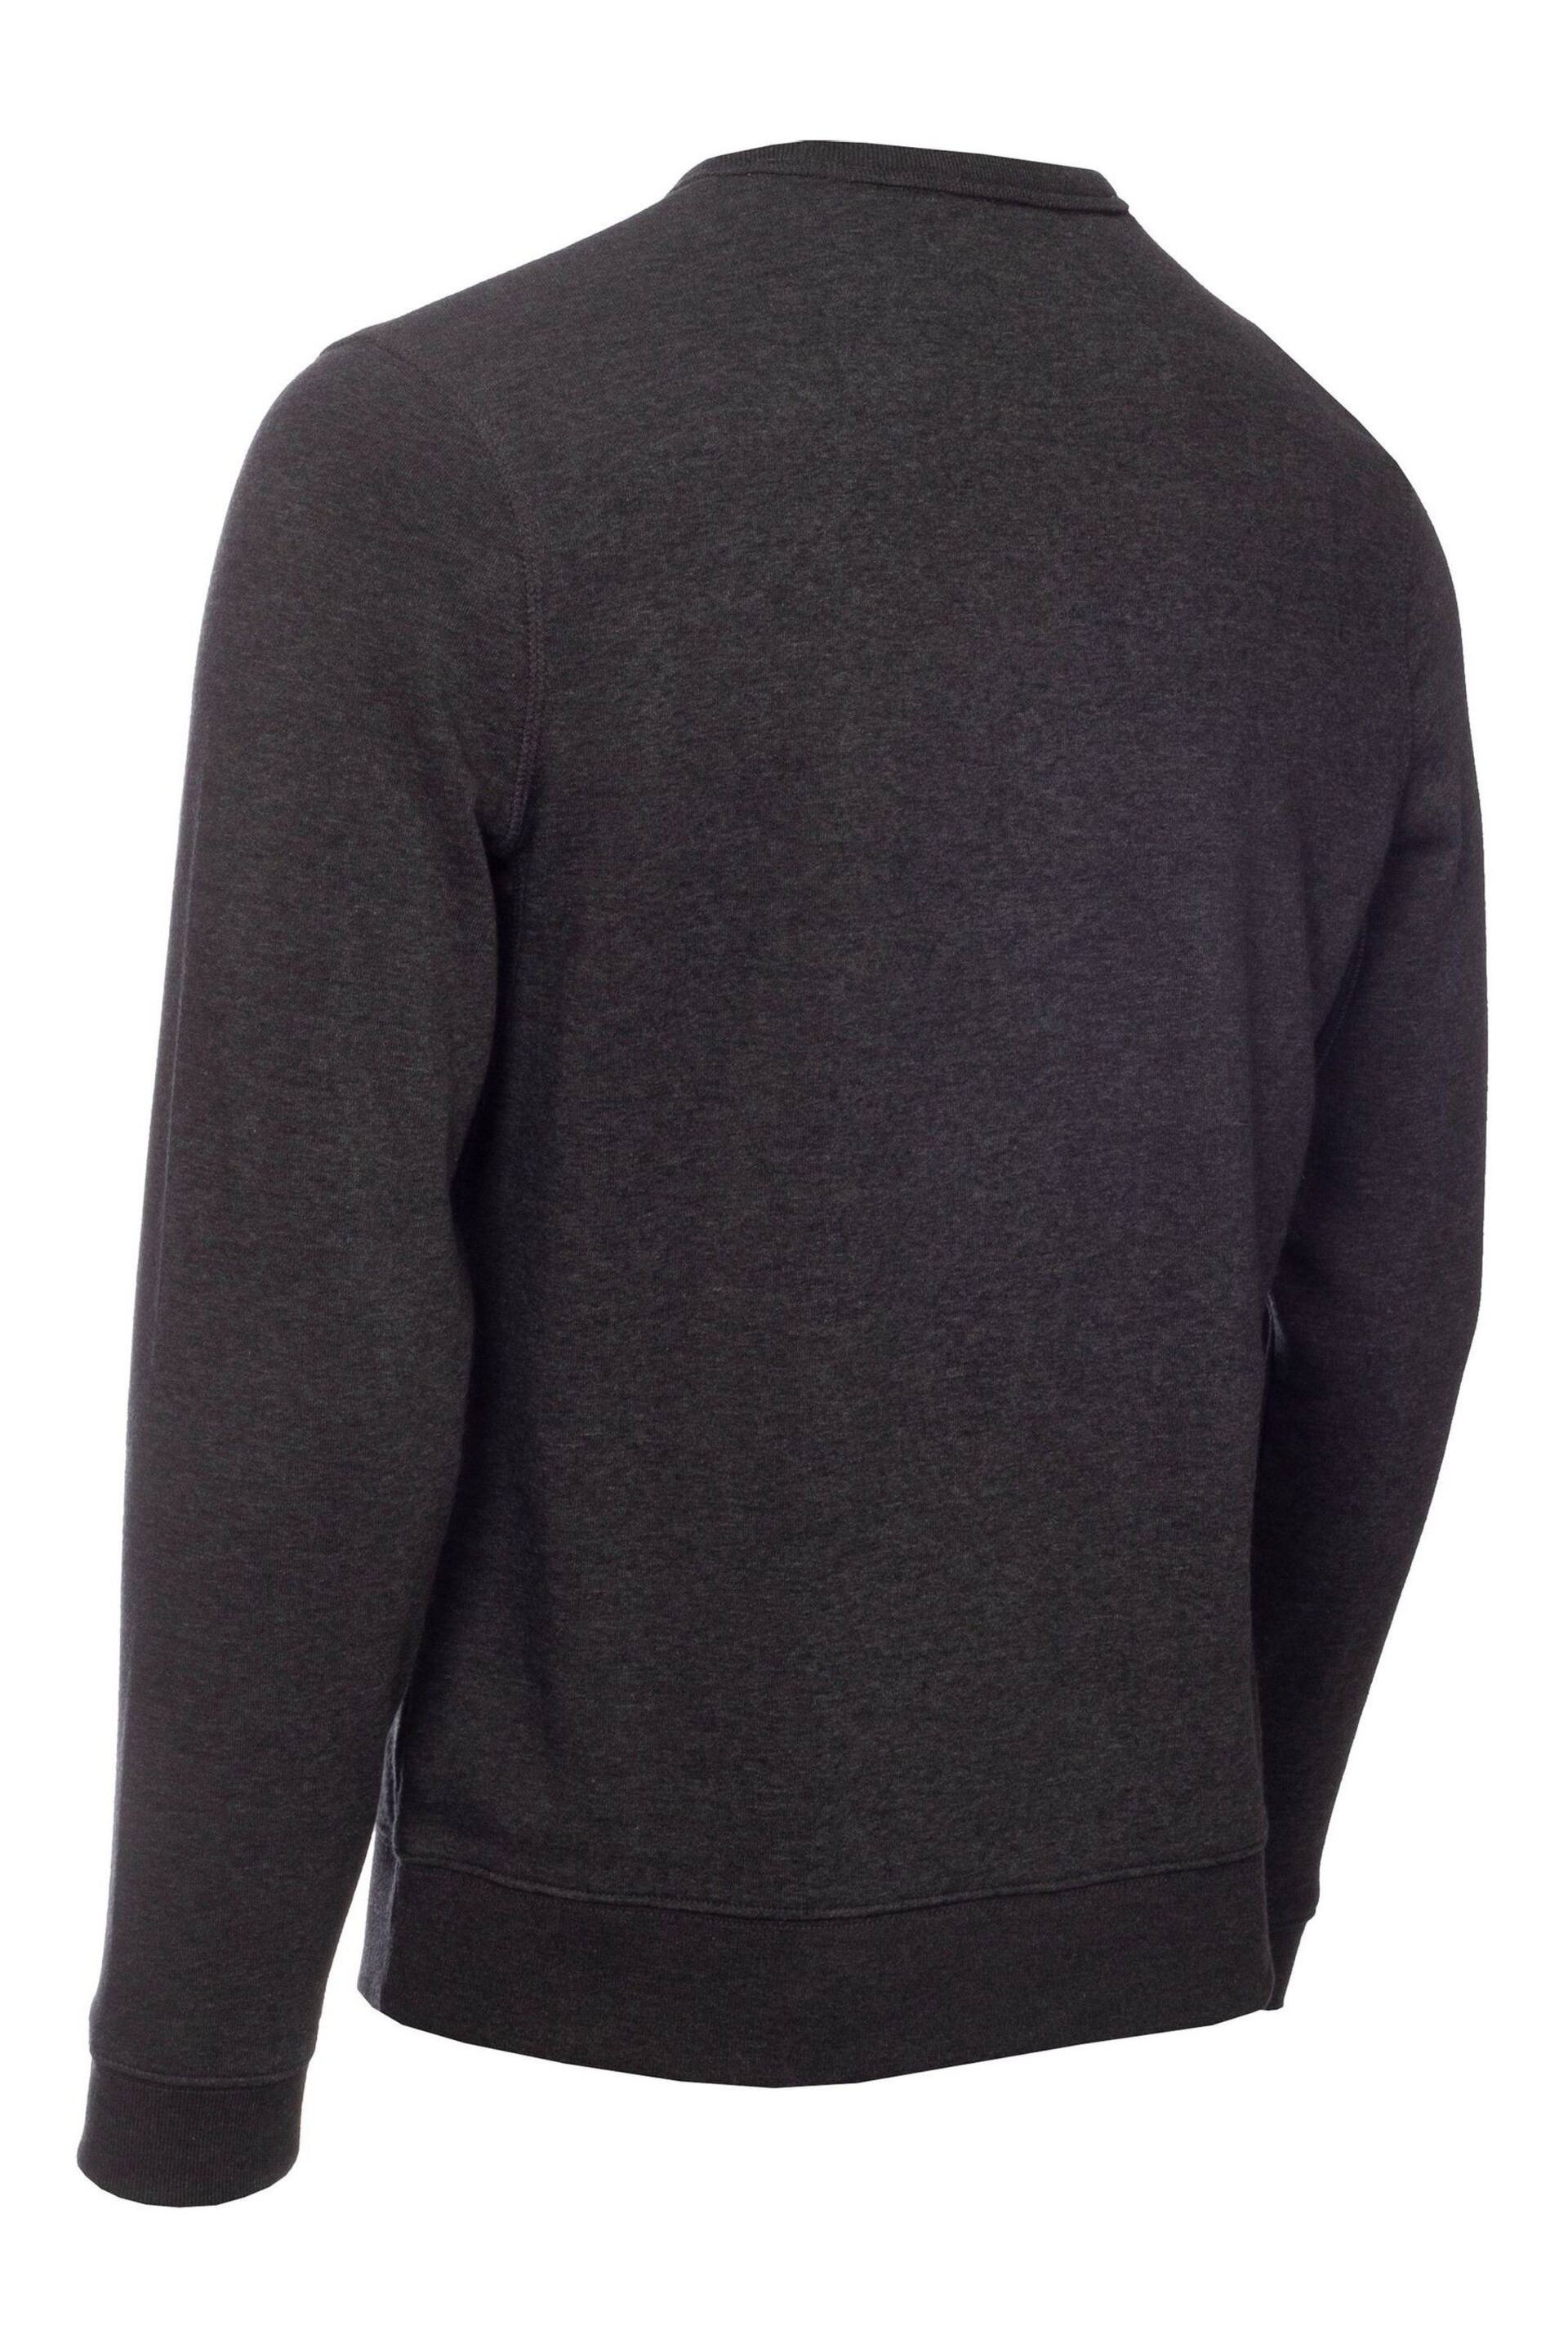 Calvin Klein Golf Grey Ohio Sweatshirt - Image 7 of 9